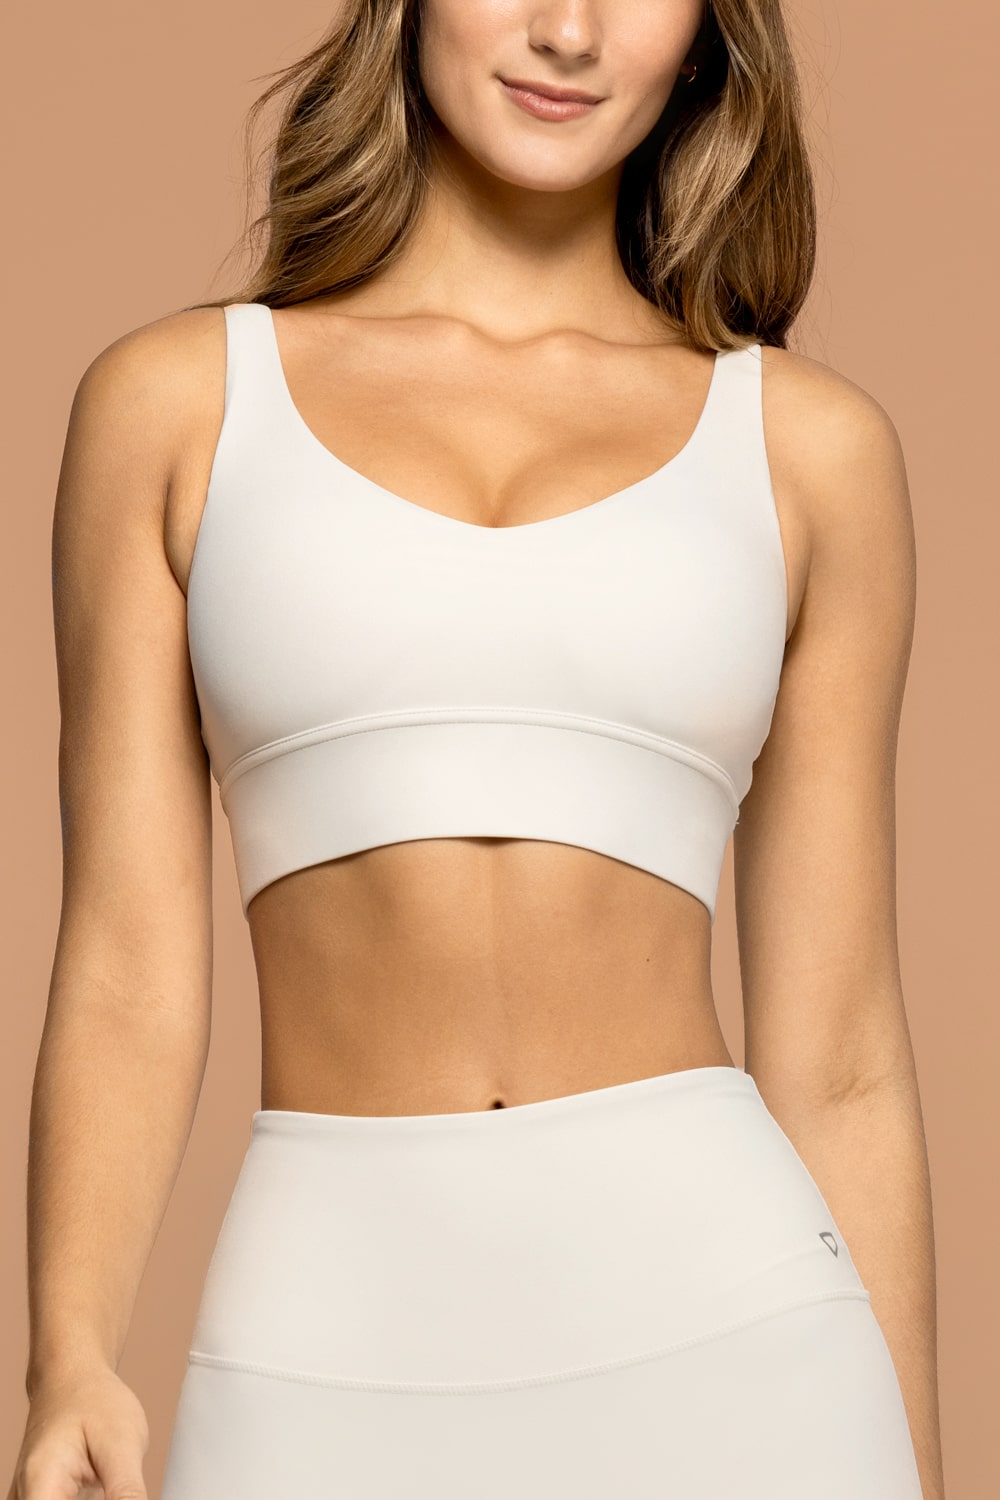 Luxana sports bra - Goddess White